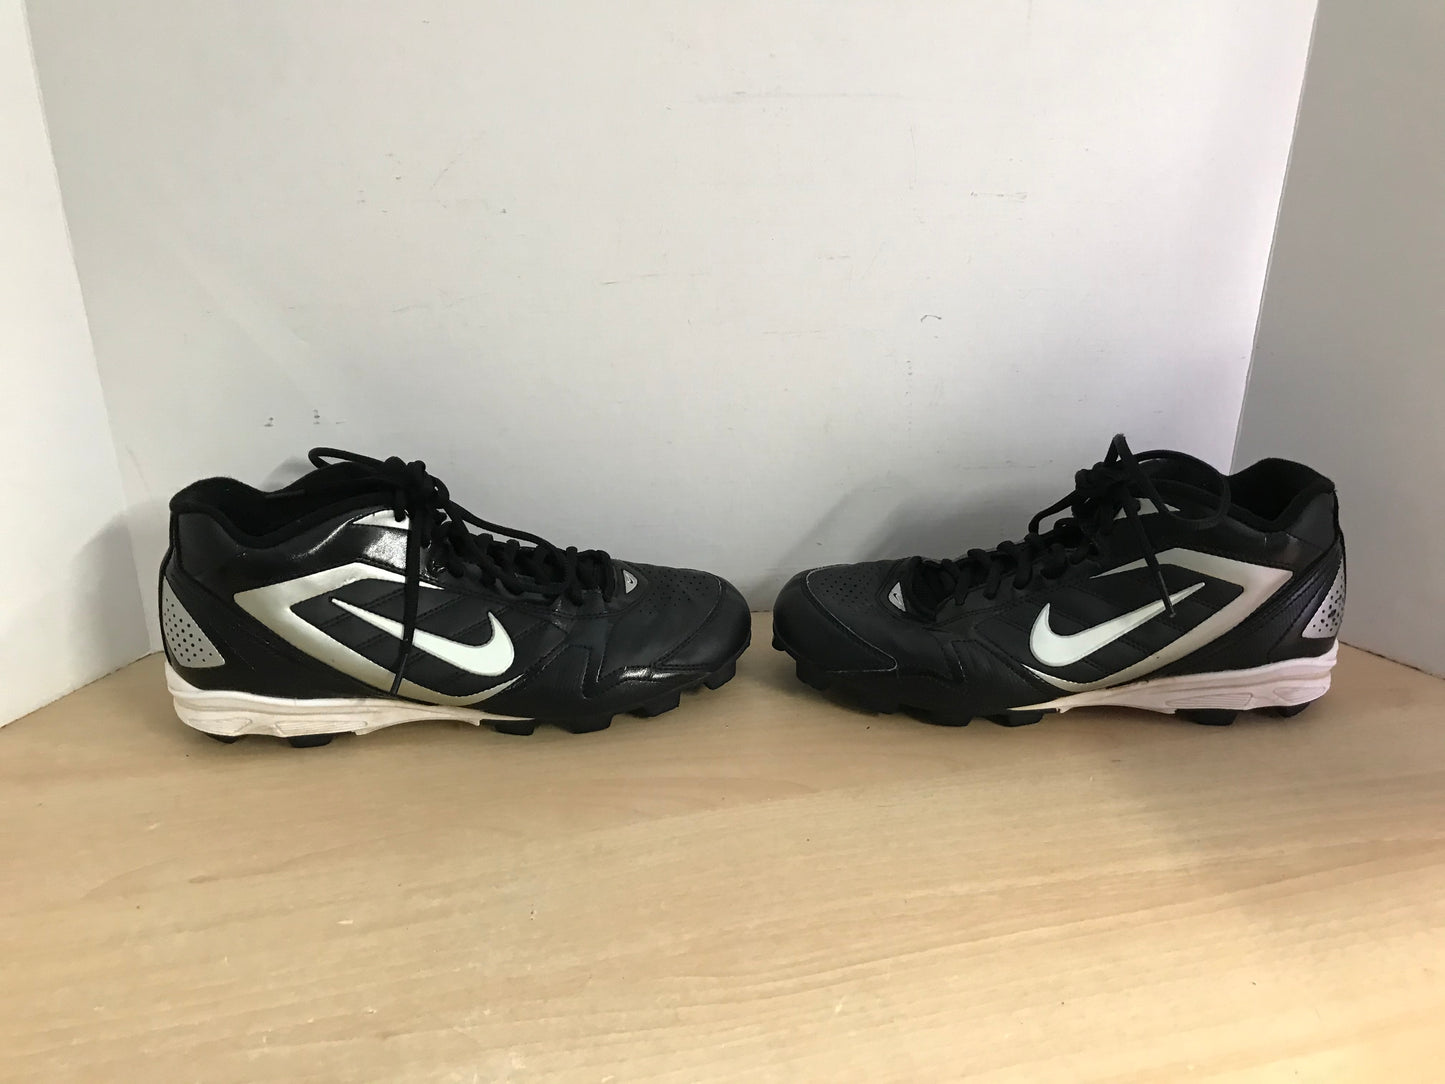 Baseball Shoes Cleats Men's Size 9 Nike Black White